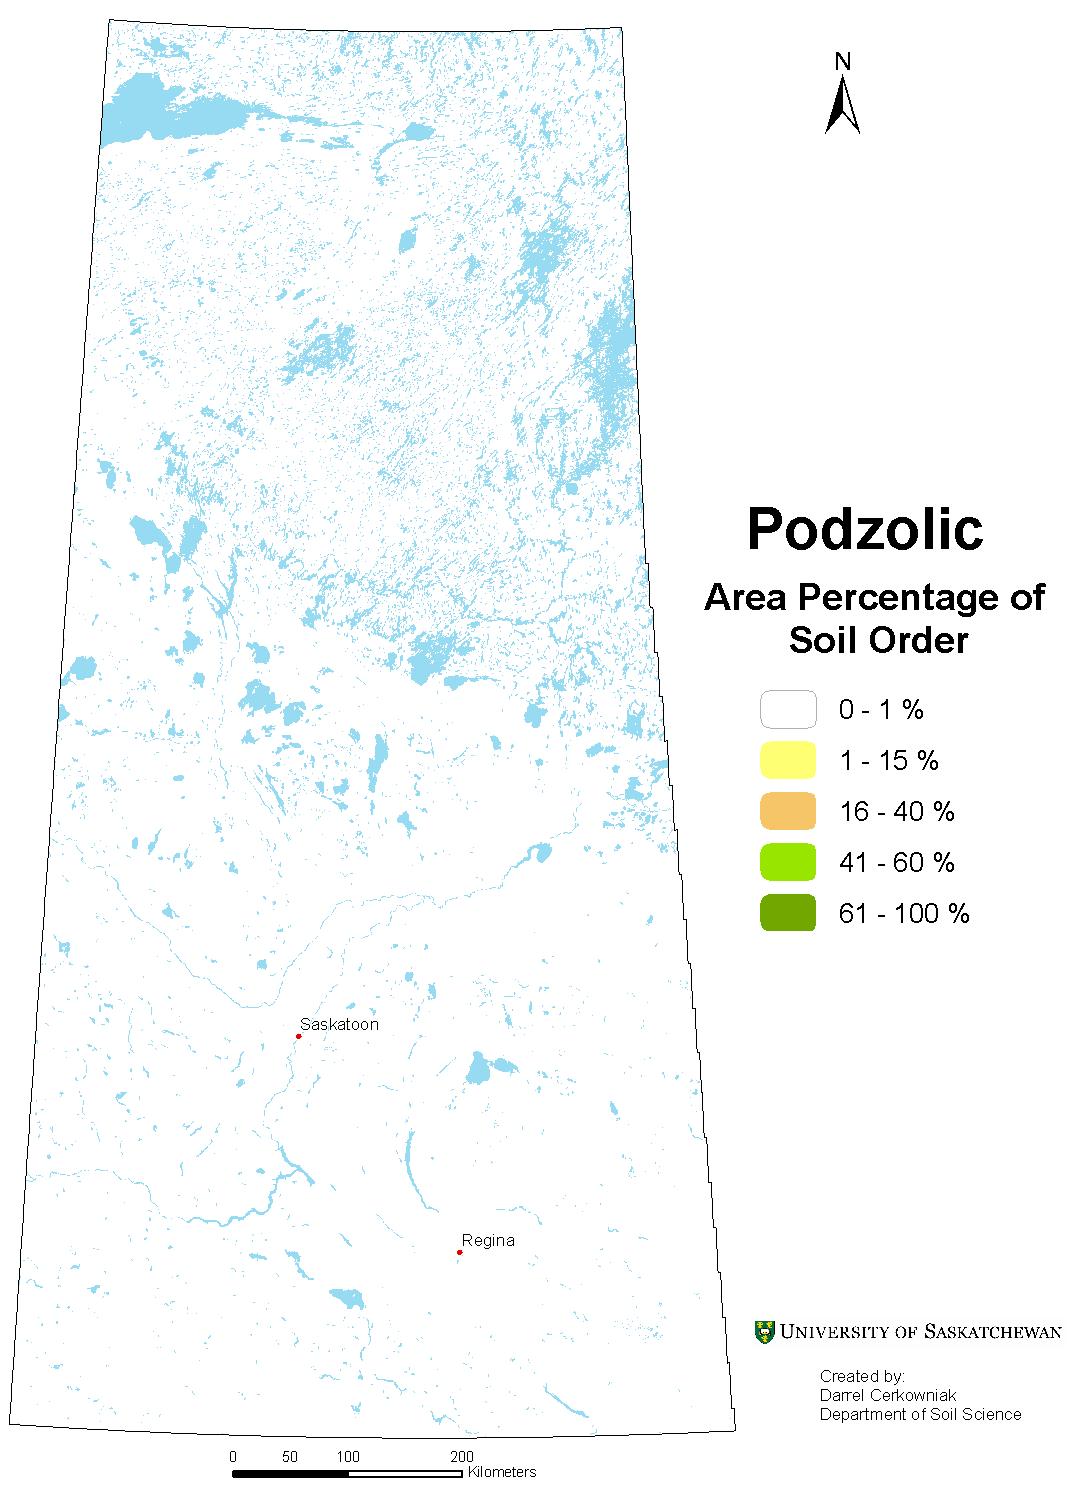 Distribution of Podzolic soils in Saskatchewan